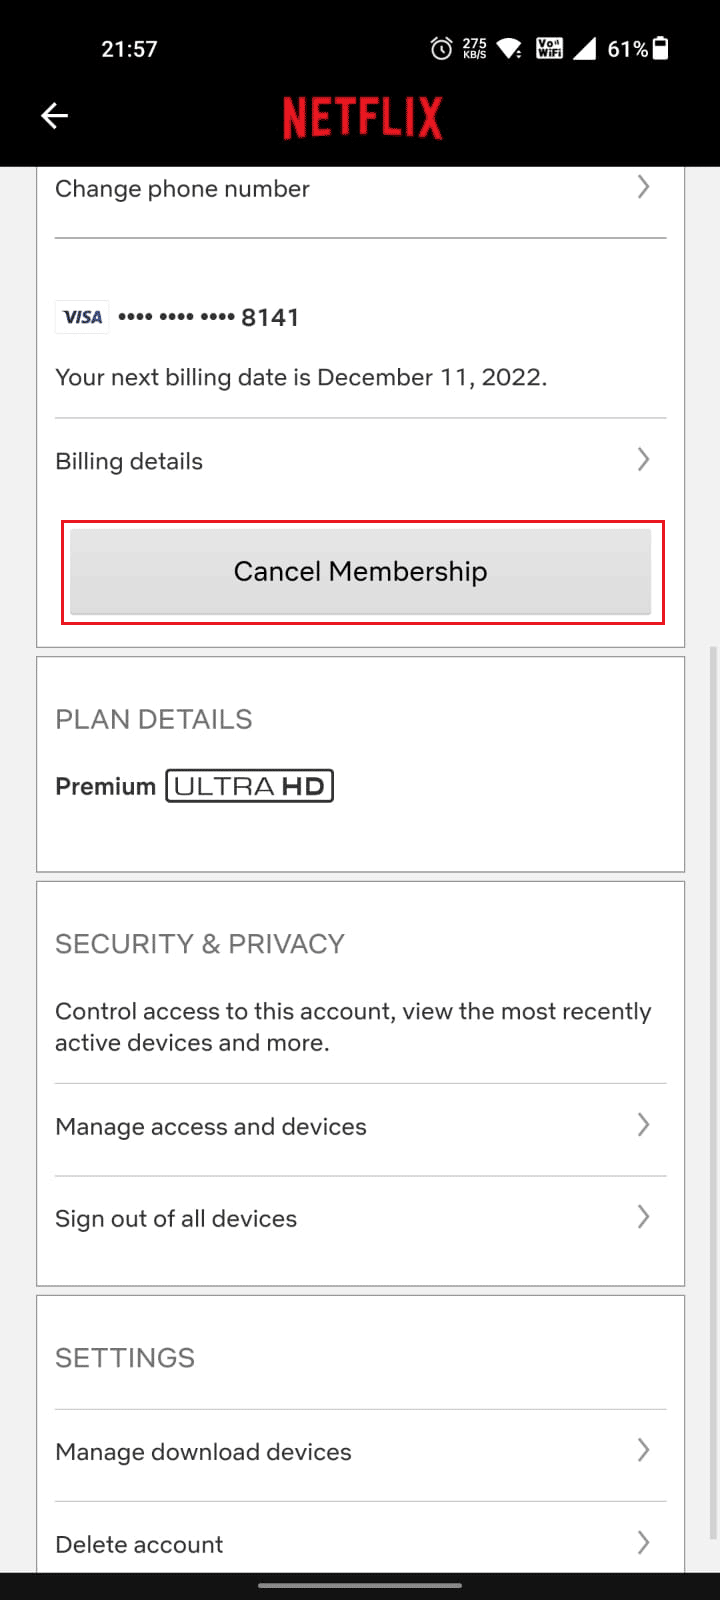 Swipe down and tap on Cancel Membership